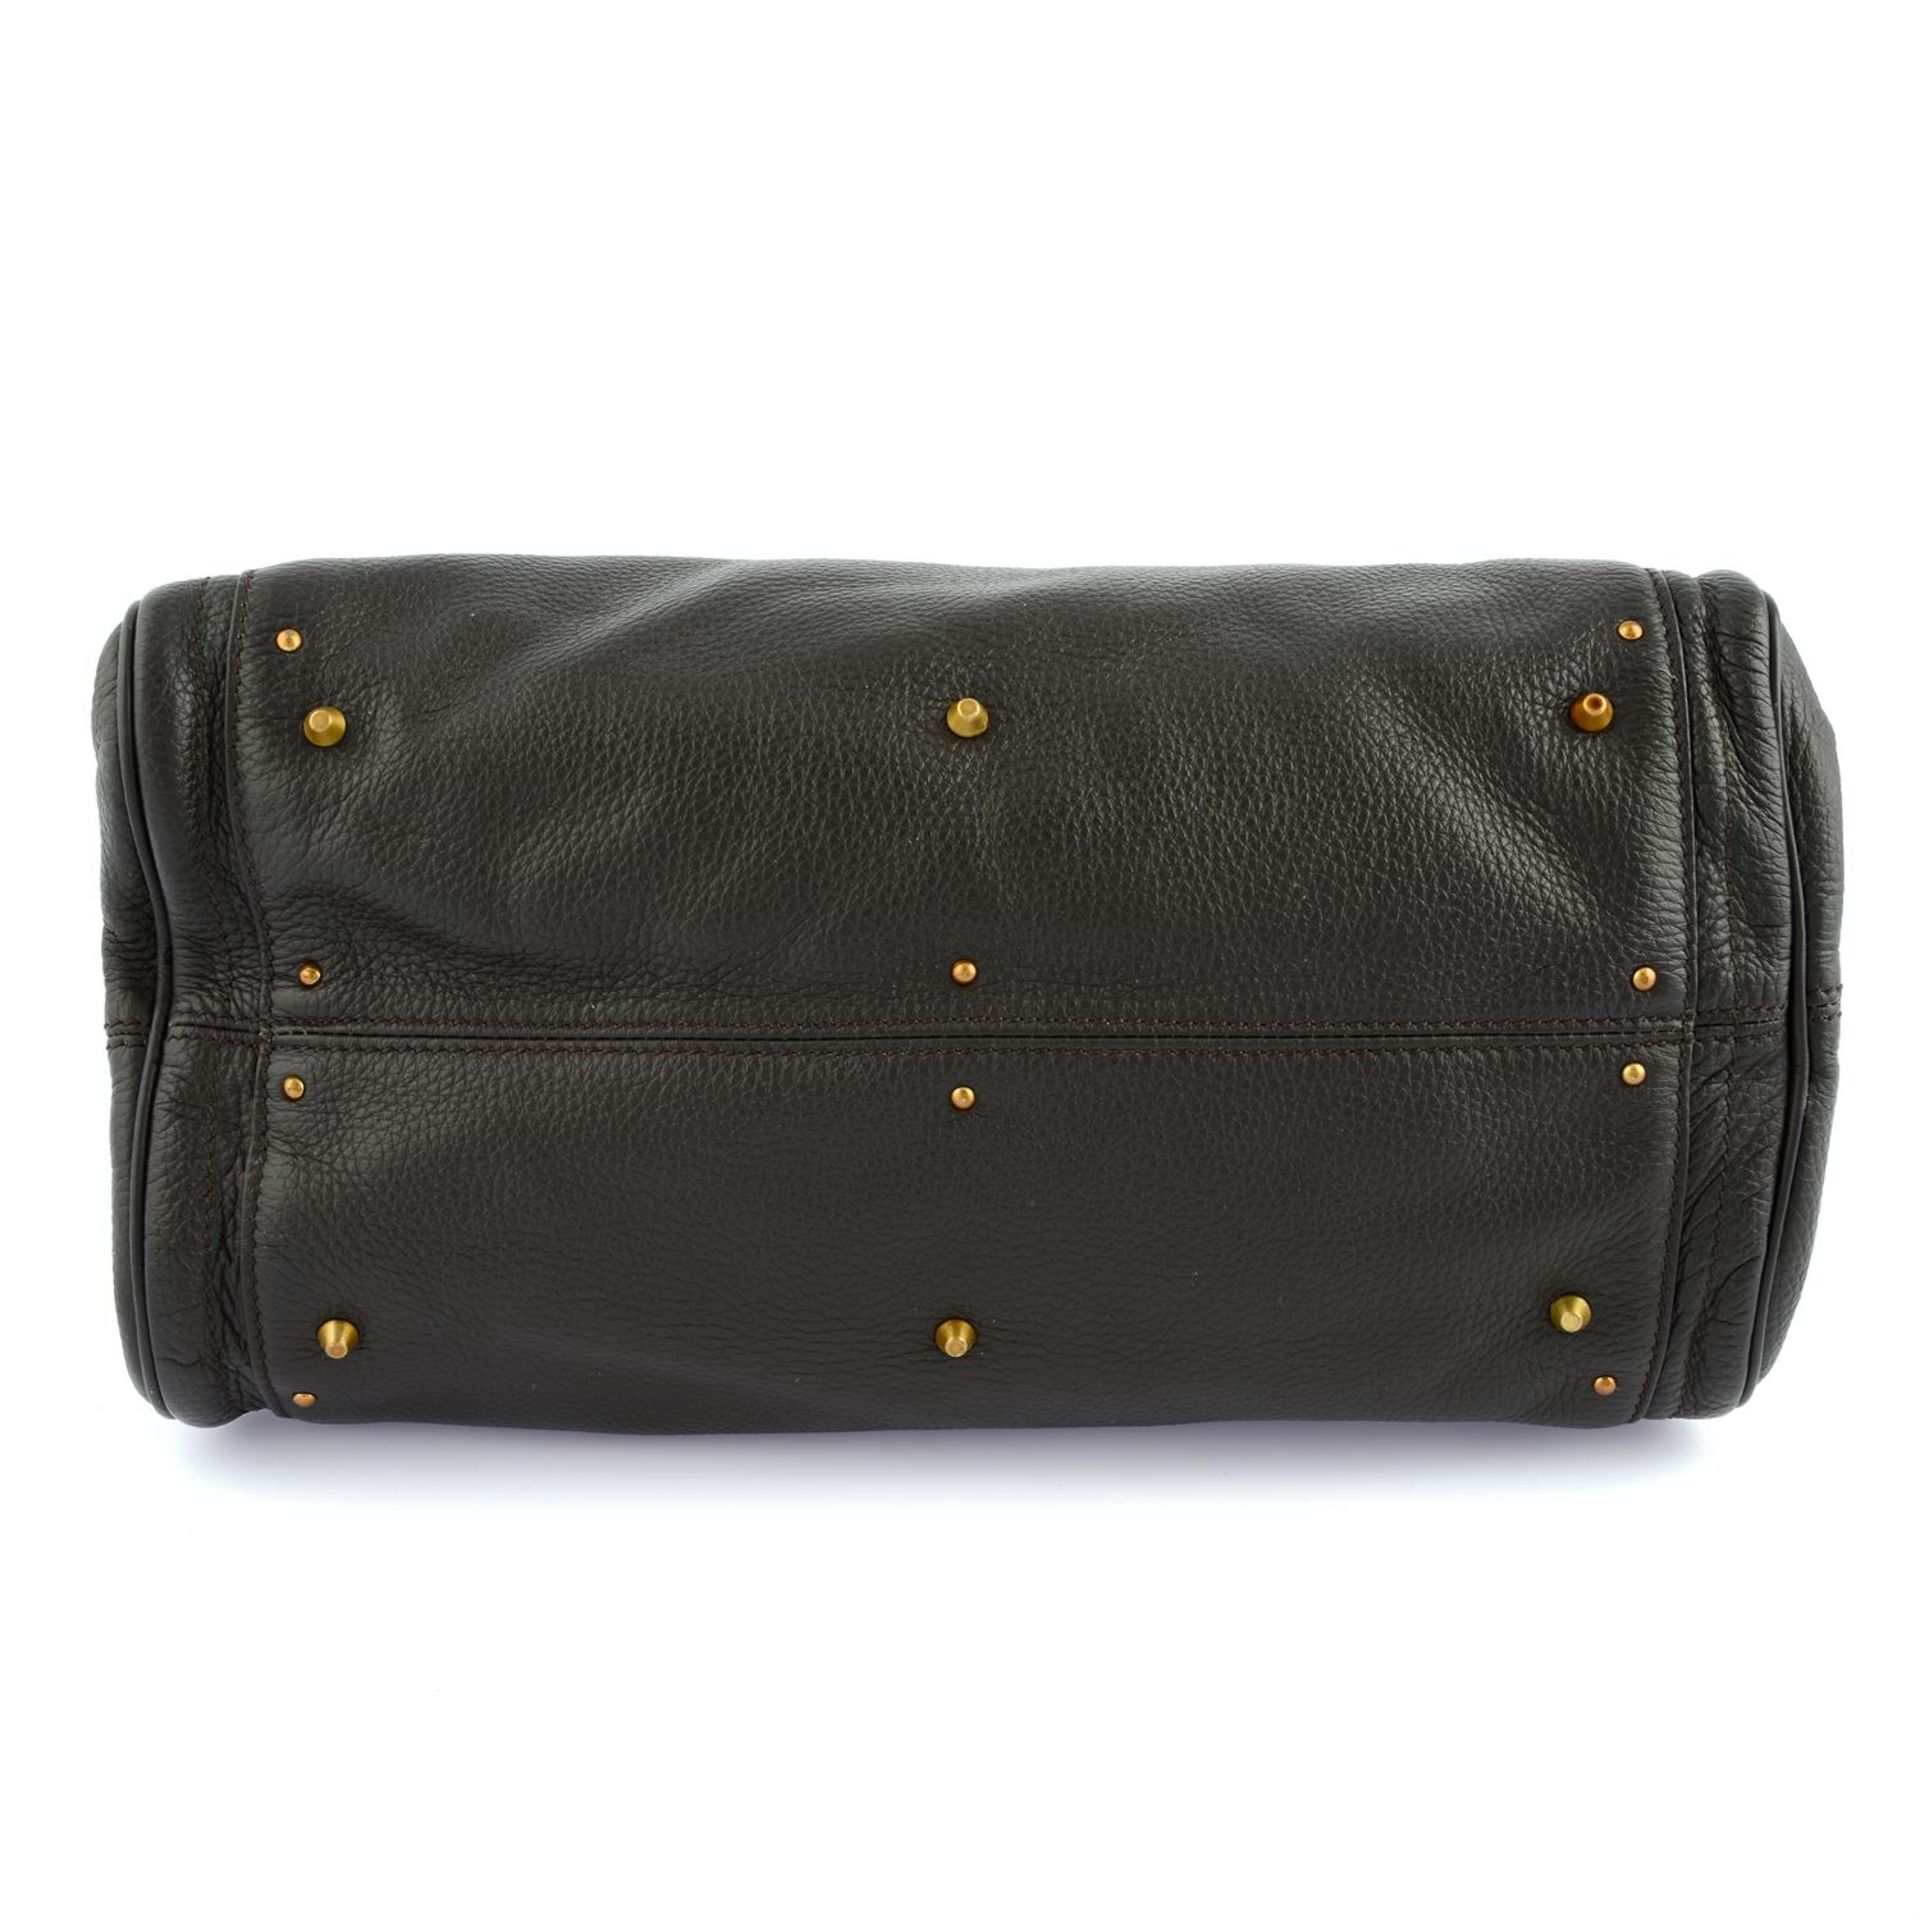 CHLOÉ- a black leather Paddington handbag. - Image 4 of 4